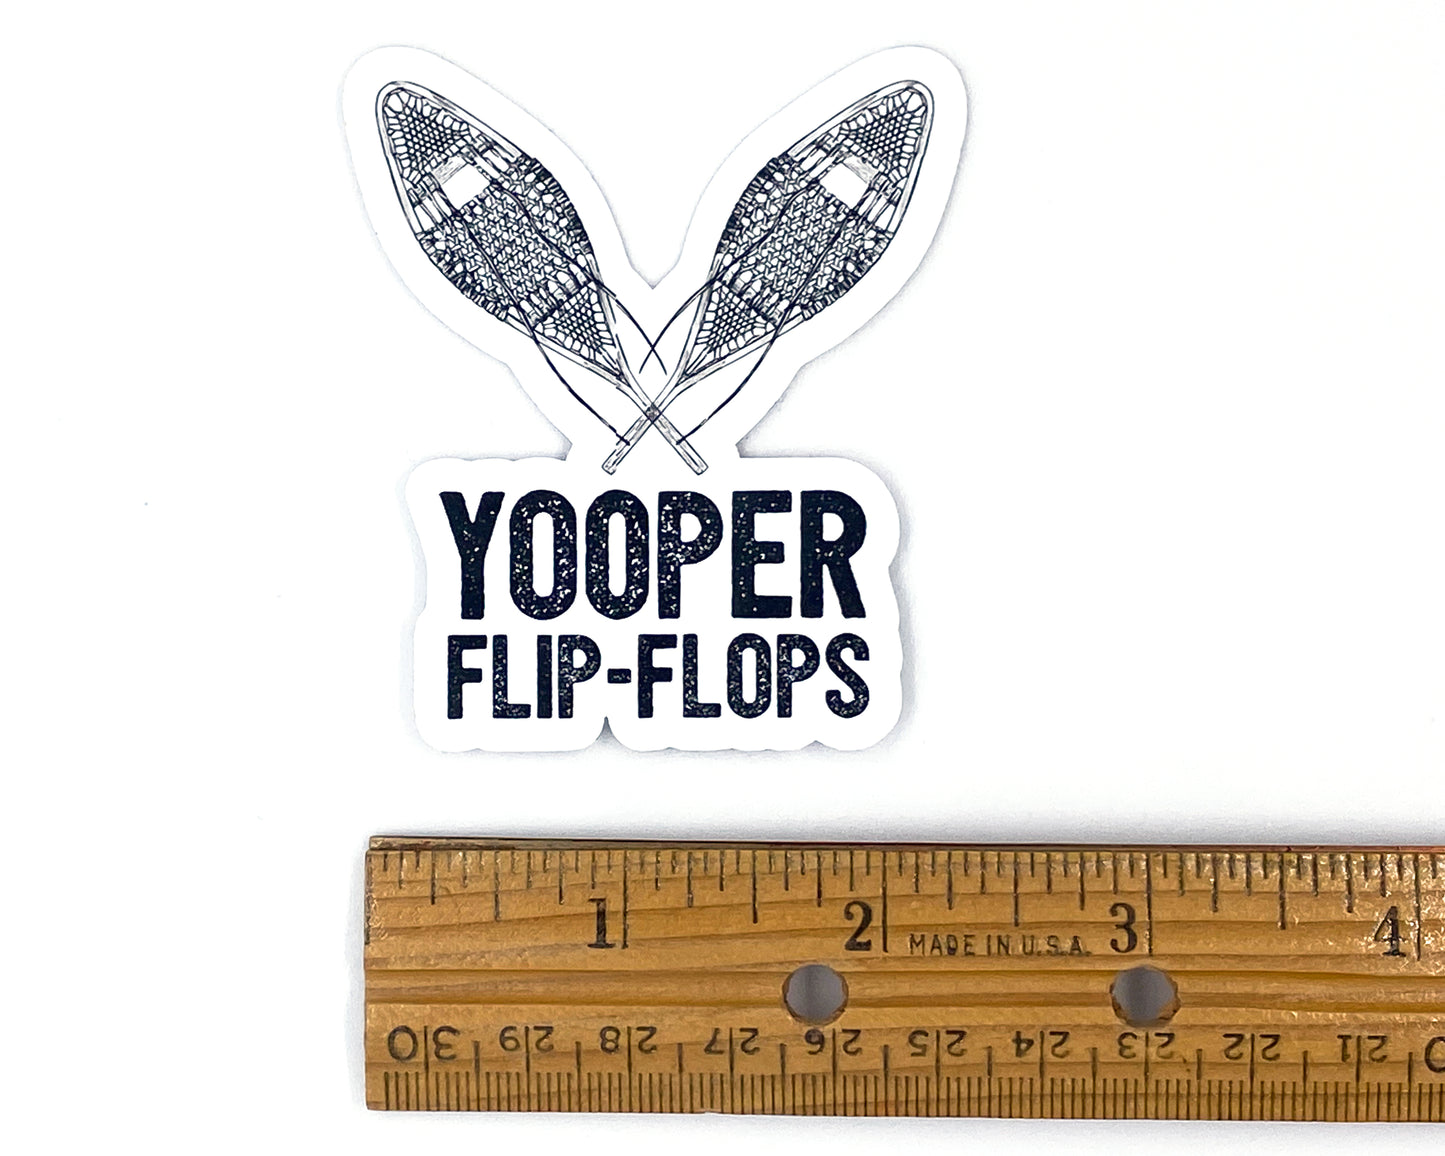 Yooper Magnet, Upper Michigan Fridge Magnets, U.P. Gift, Yooper Flip-Flops, Snowshoe Magnet